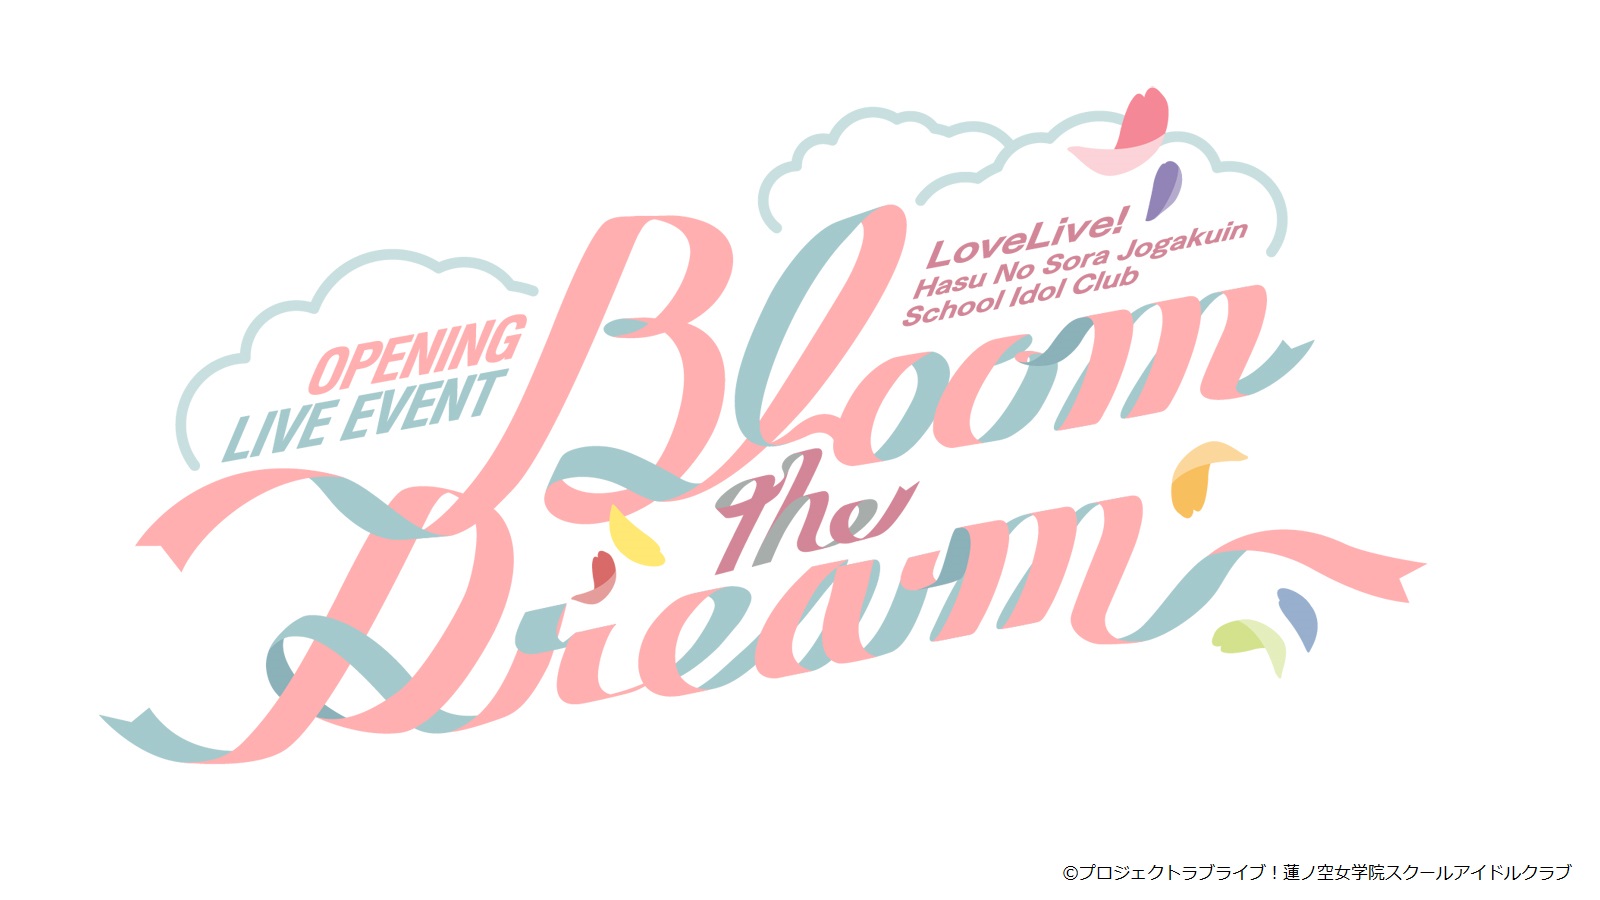 [Streaming+] Love Live! Hasu no sora Jogakuin School Idol Club OPENING LIVE EVENT ～Bloom the Dream～